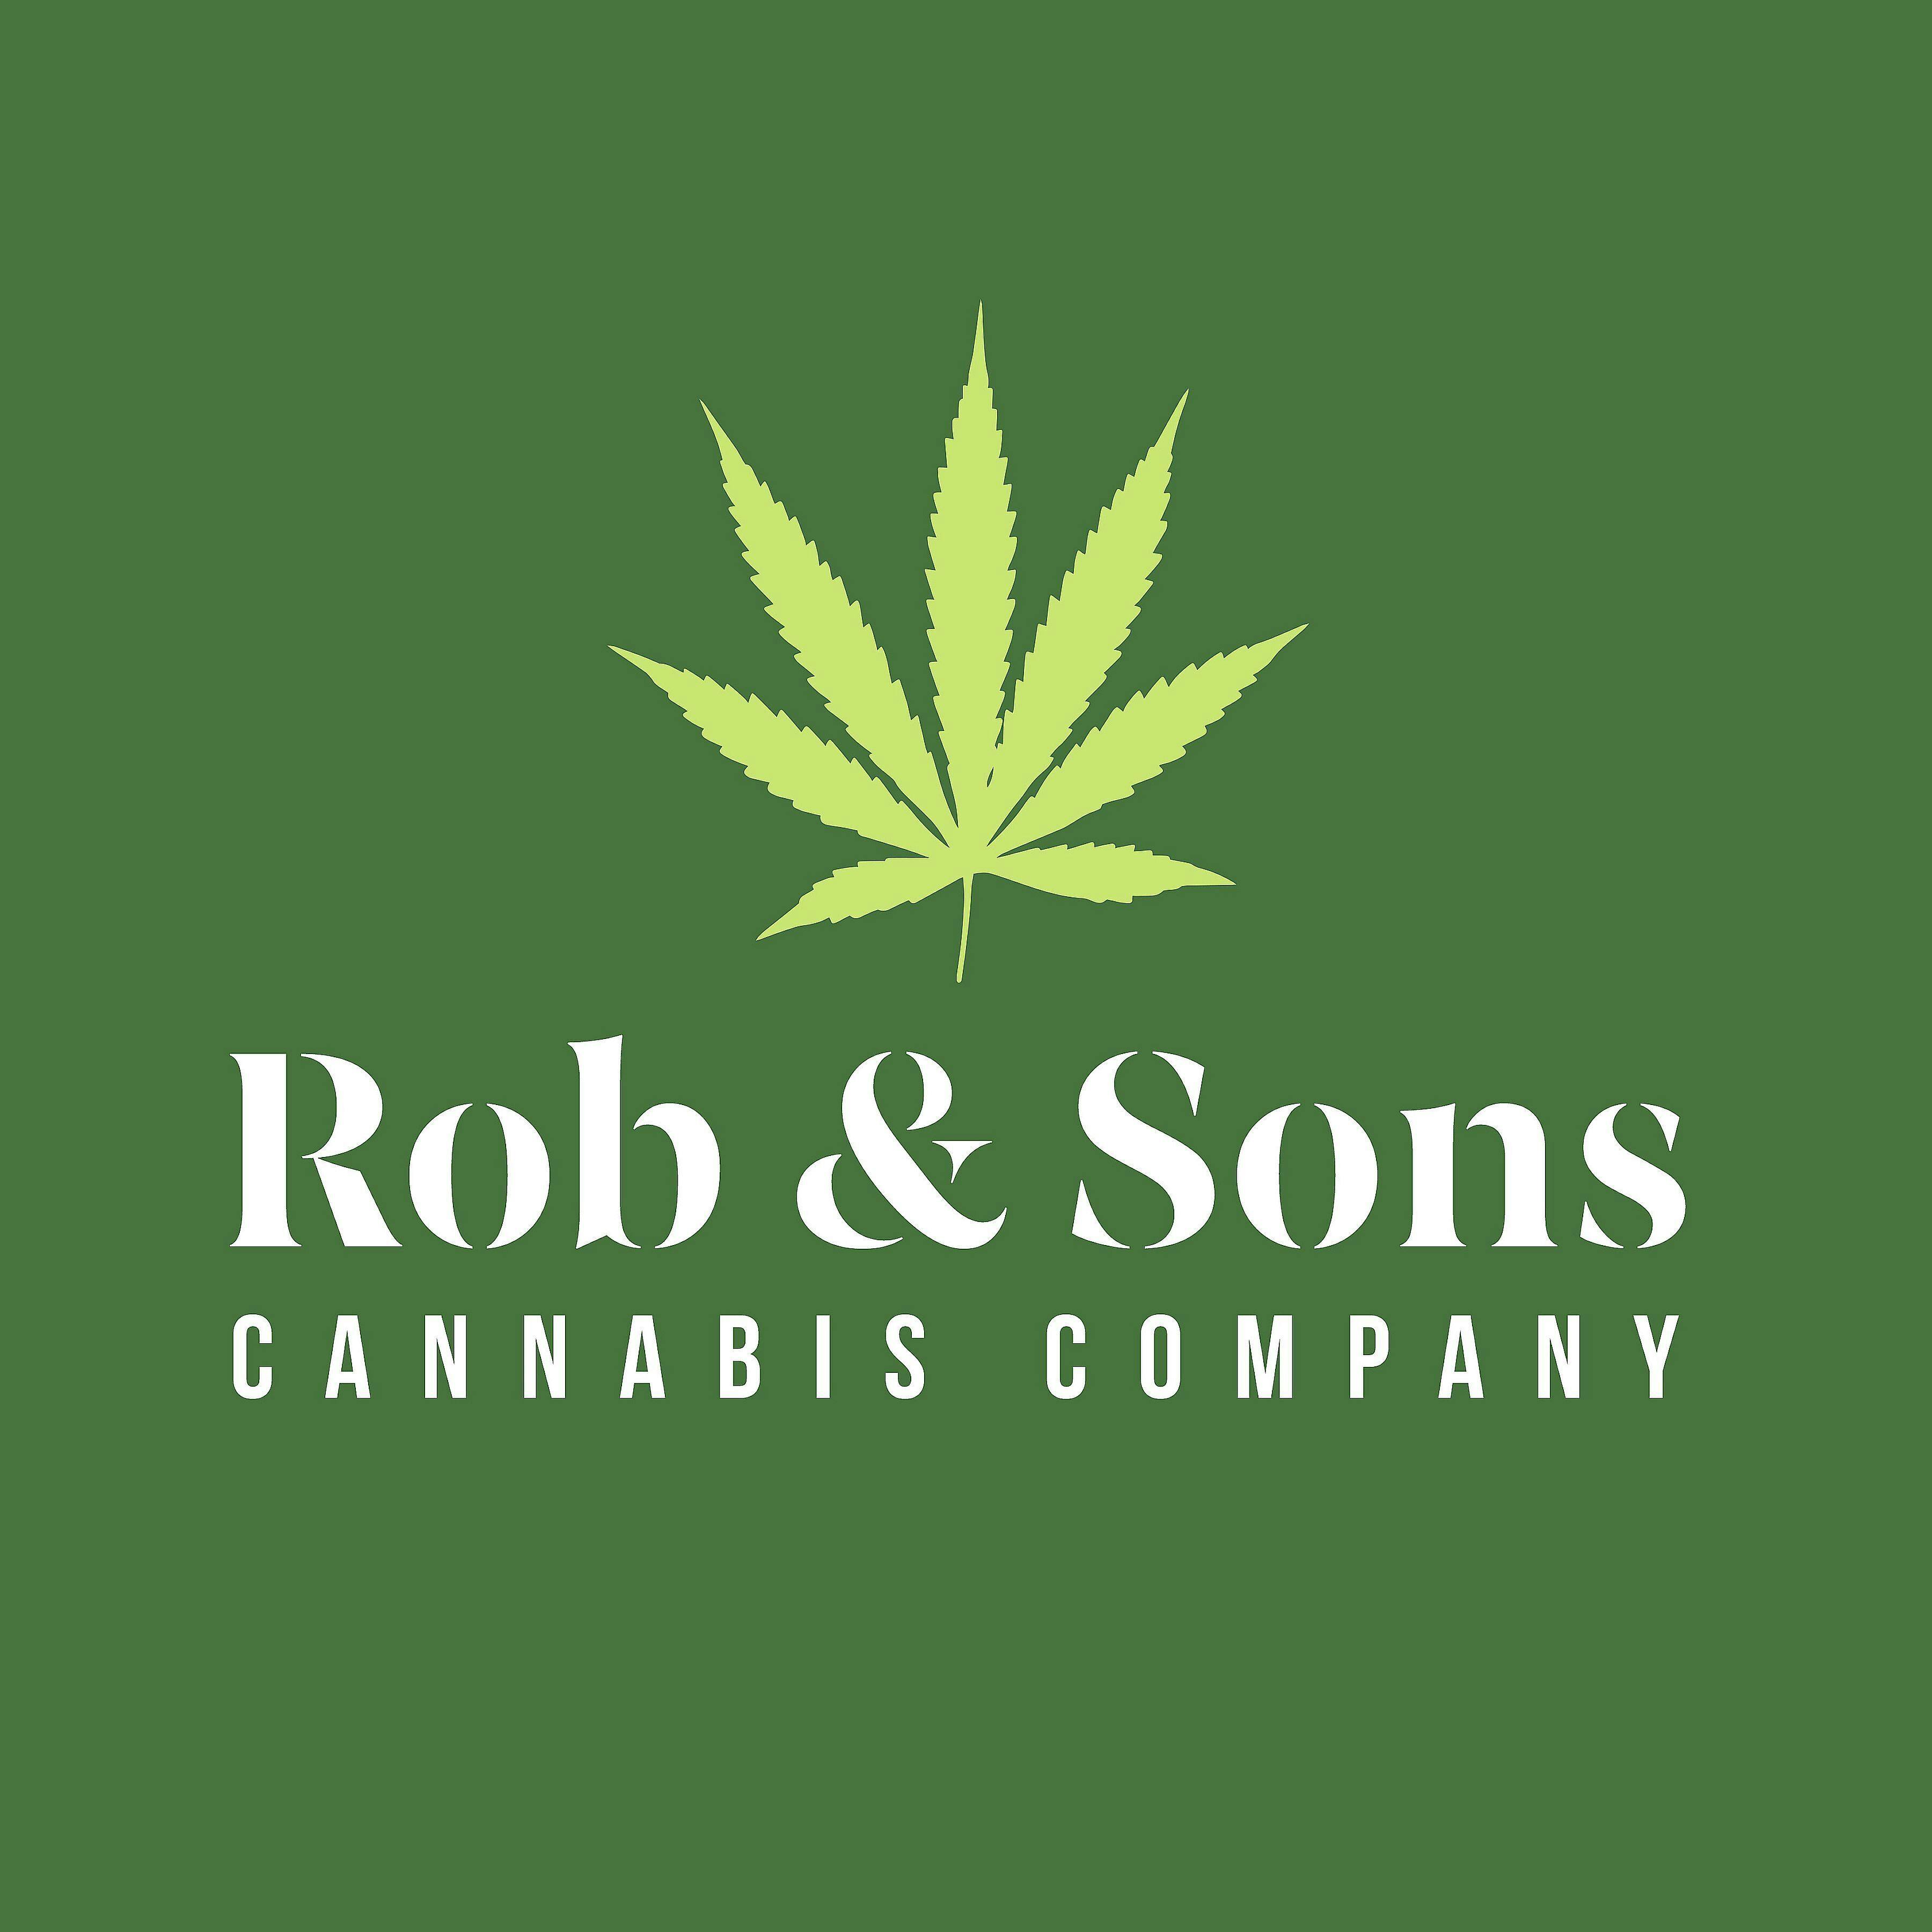 Rob & Sons Cannabis Company logo